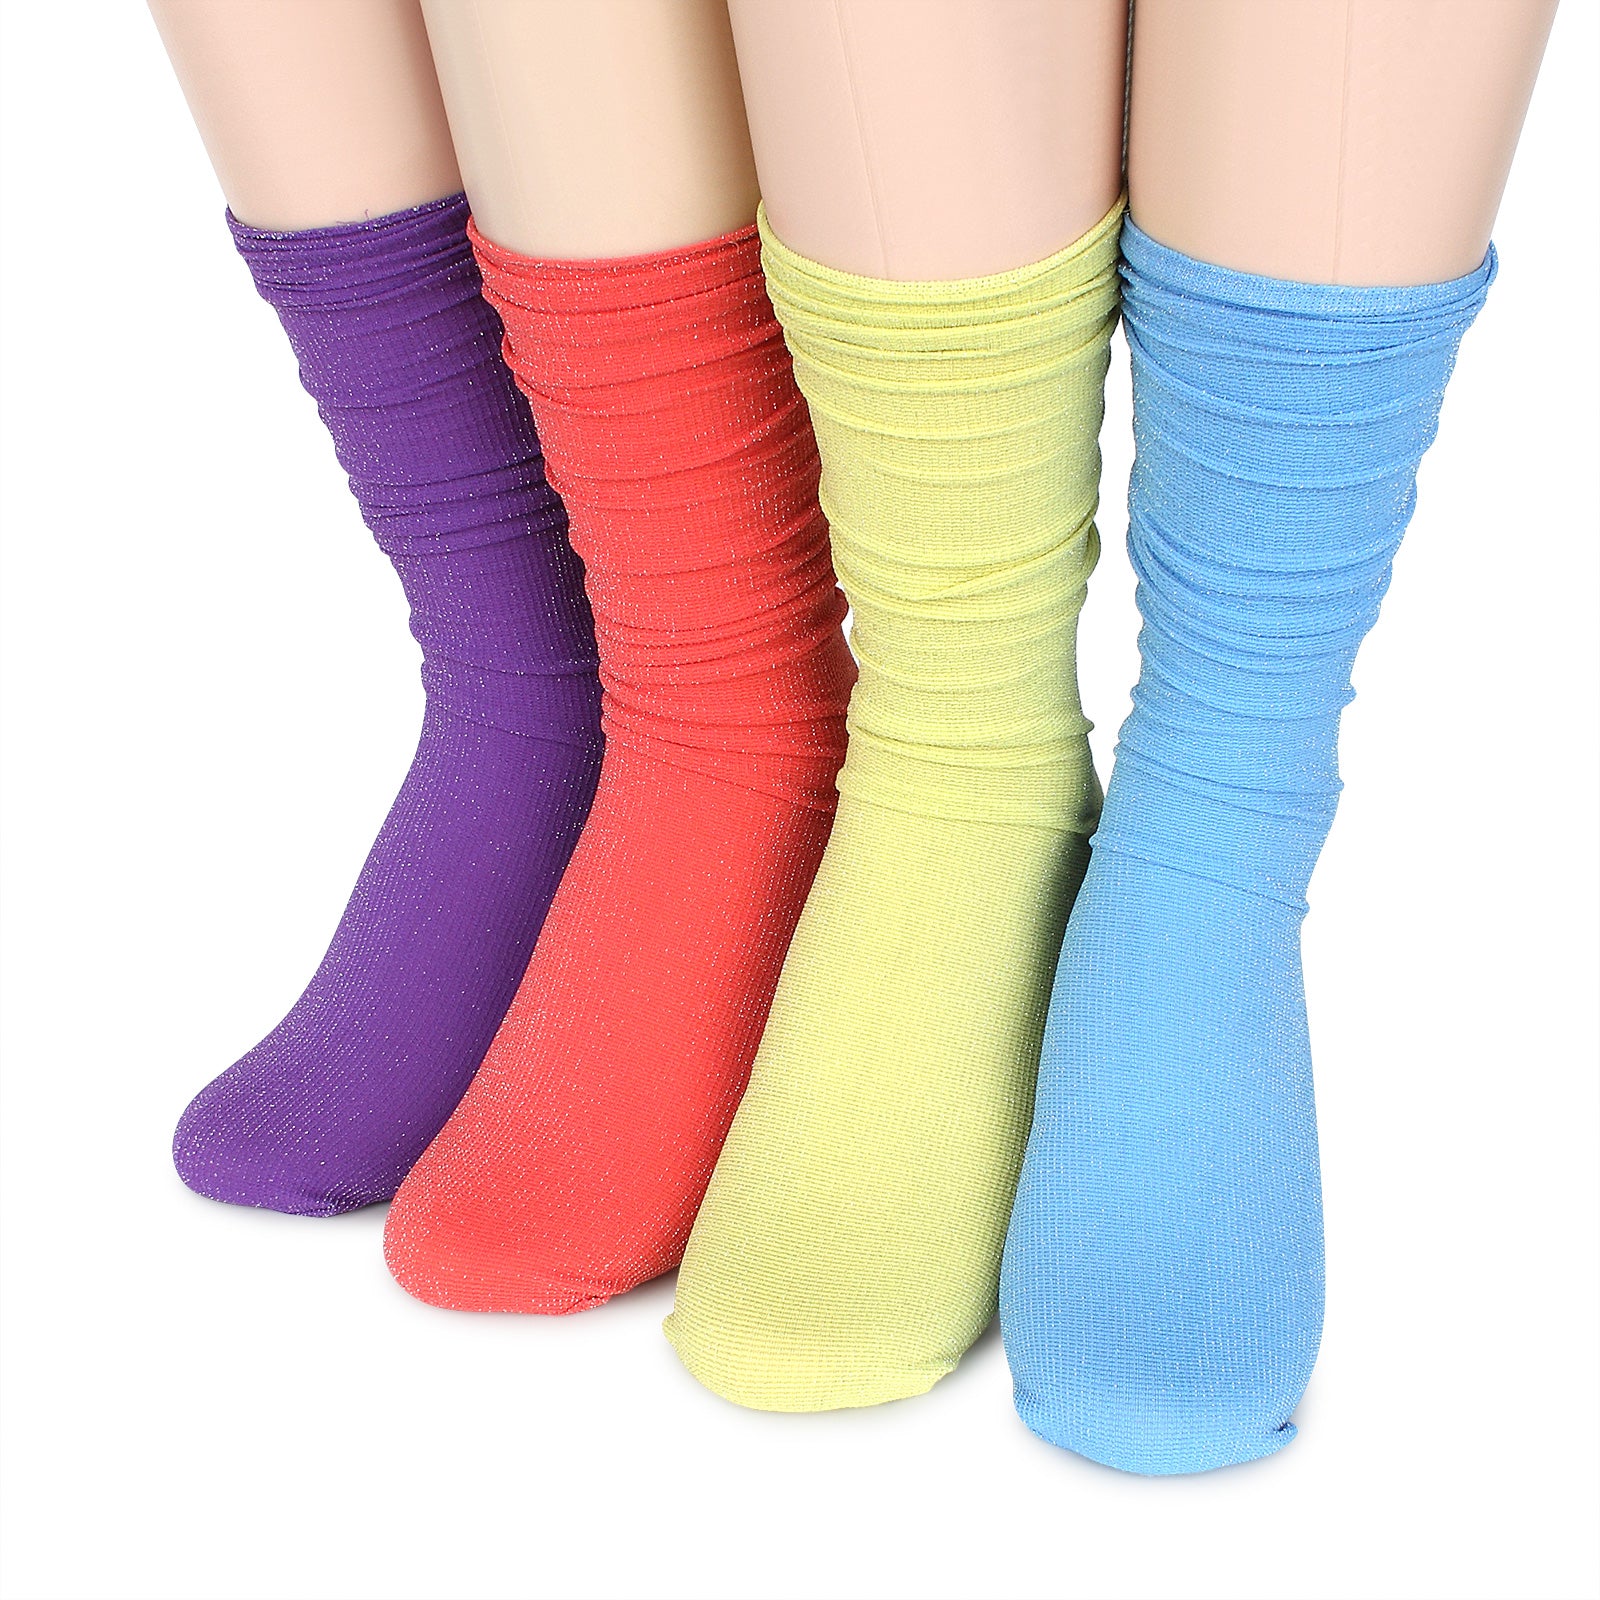 Vivid glitter Pearl stocking ribbed socks women high socks YJ14